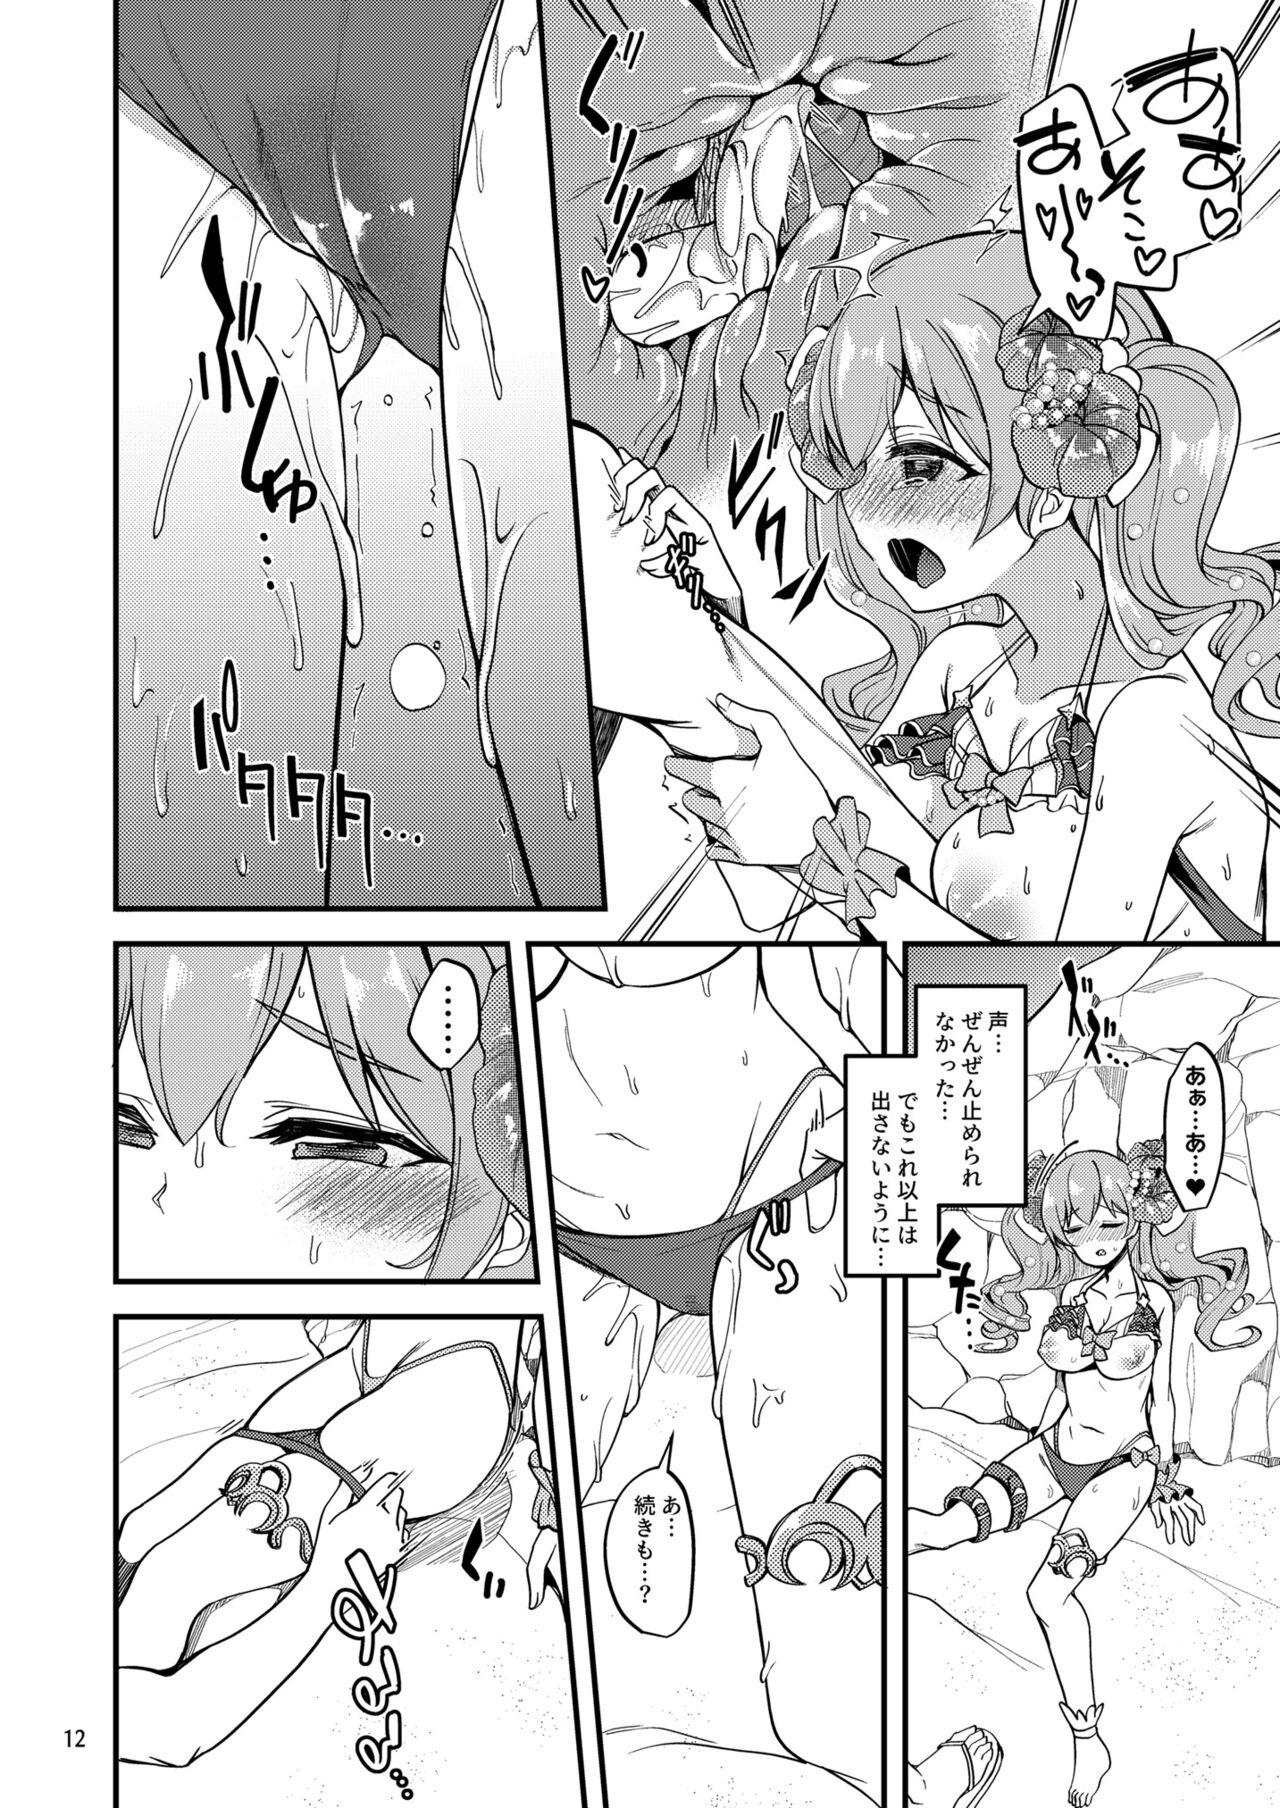 Sucks Tsumugi Make Heroine Move!! 07 - Princess connect Ebony - Page 11